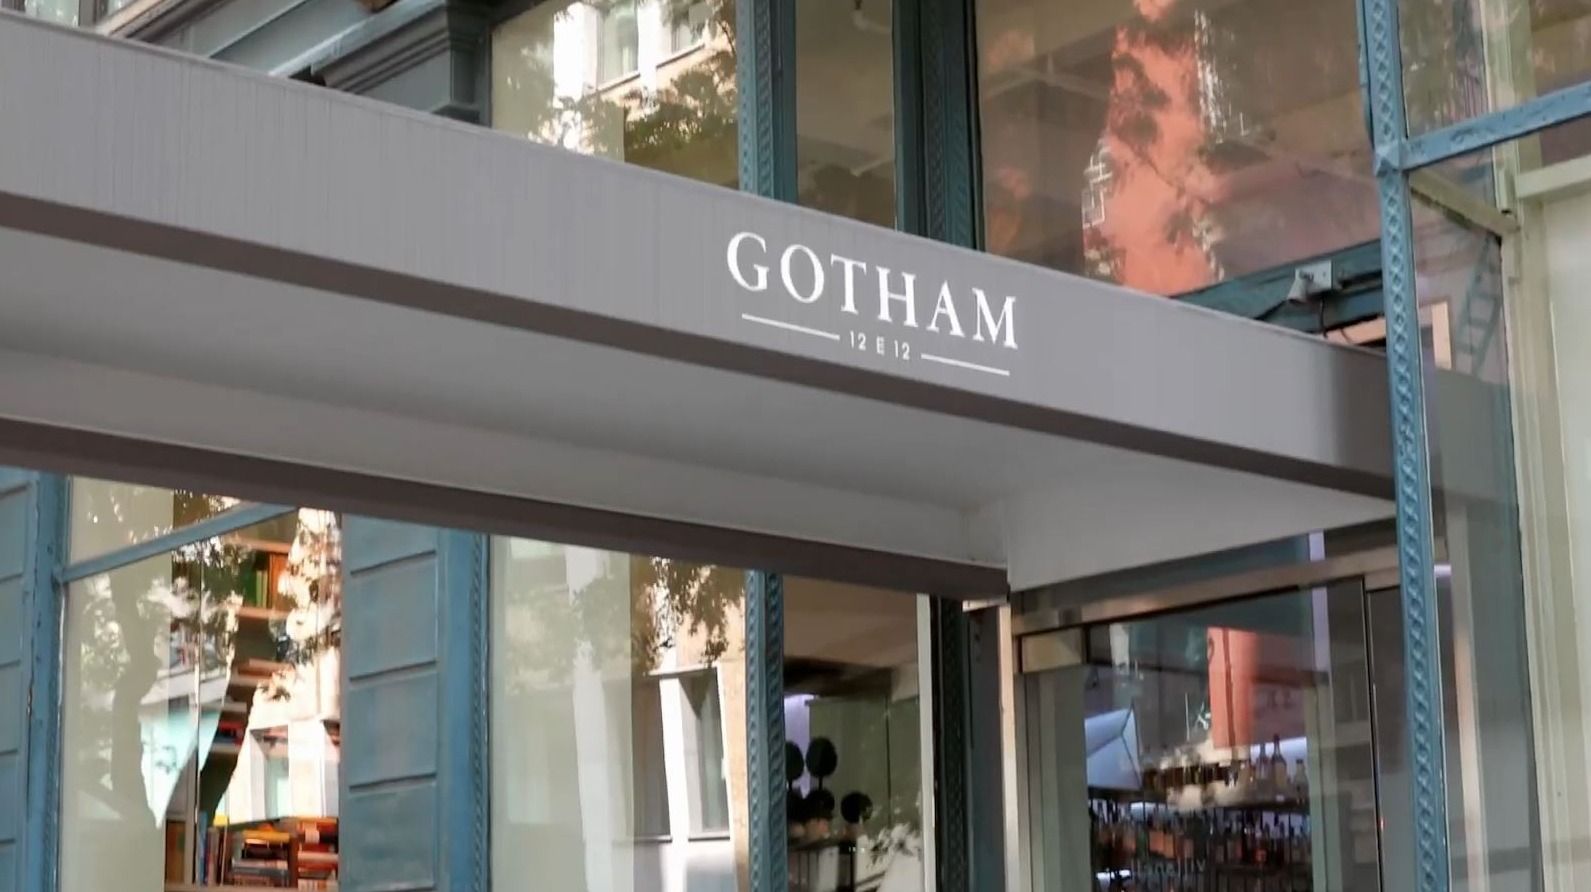 Restaurant sign that says Gotham